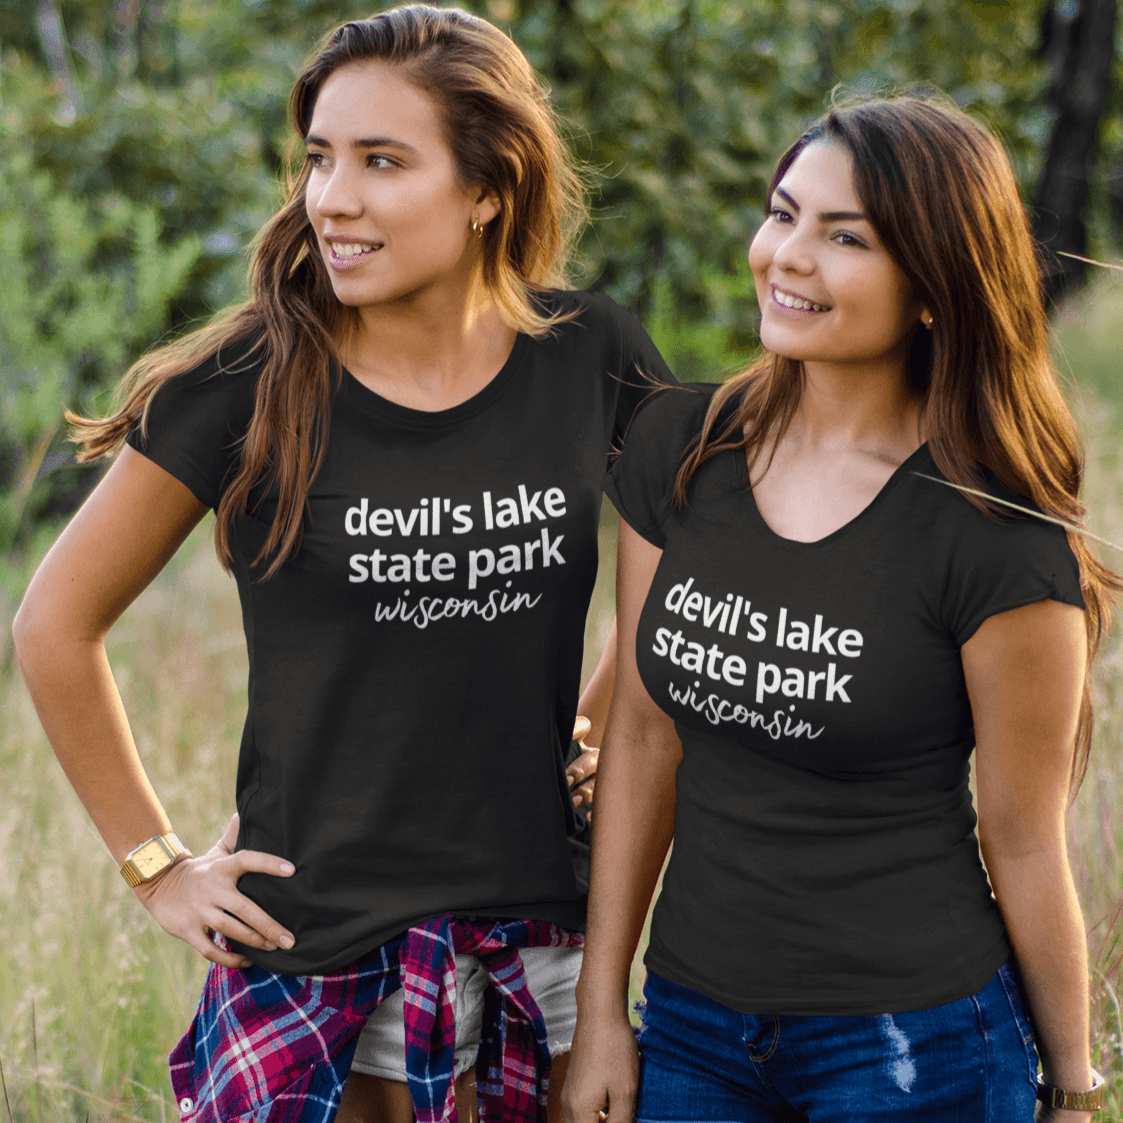 Devil's Lake State Park T-Shirt - Adventure Threads Company